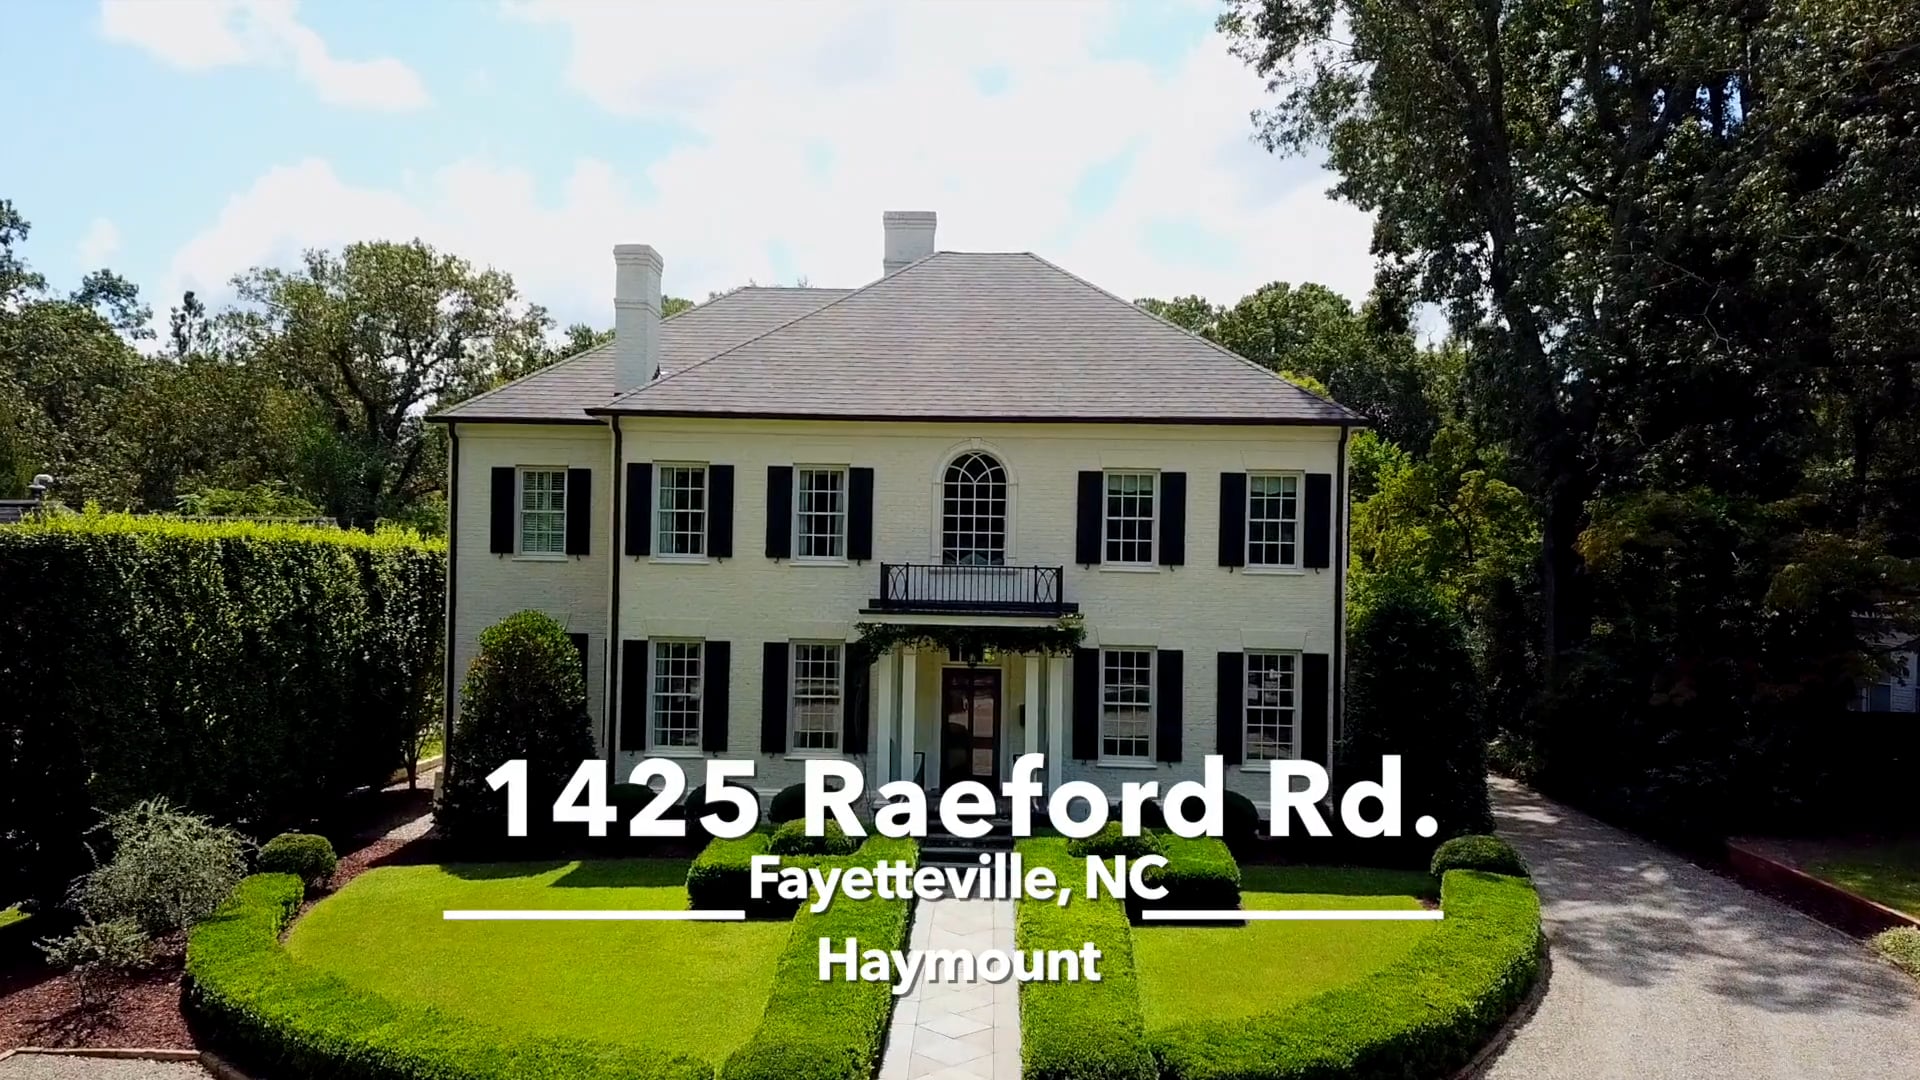 1425 Raeford Rd - Fayetteville, NC (Haymount)